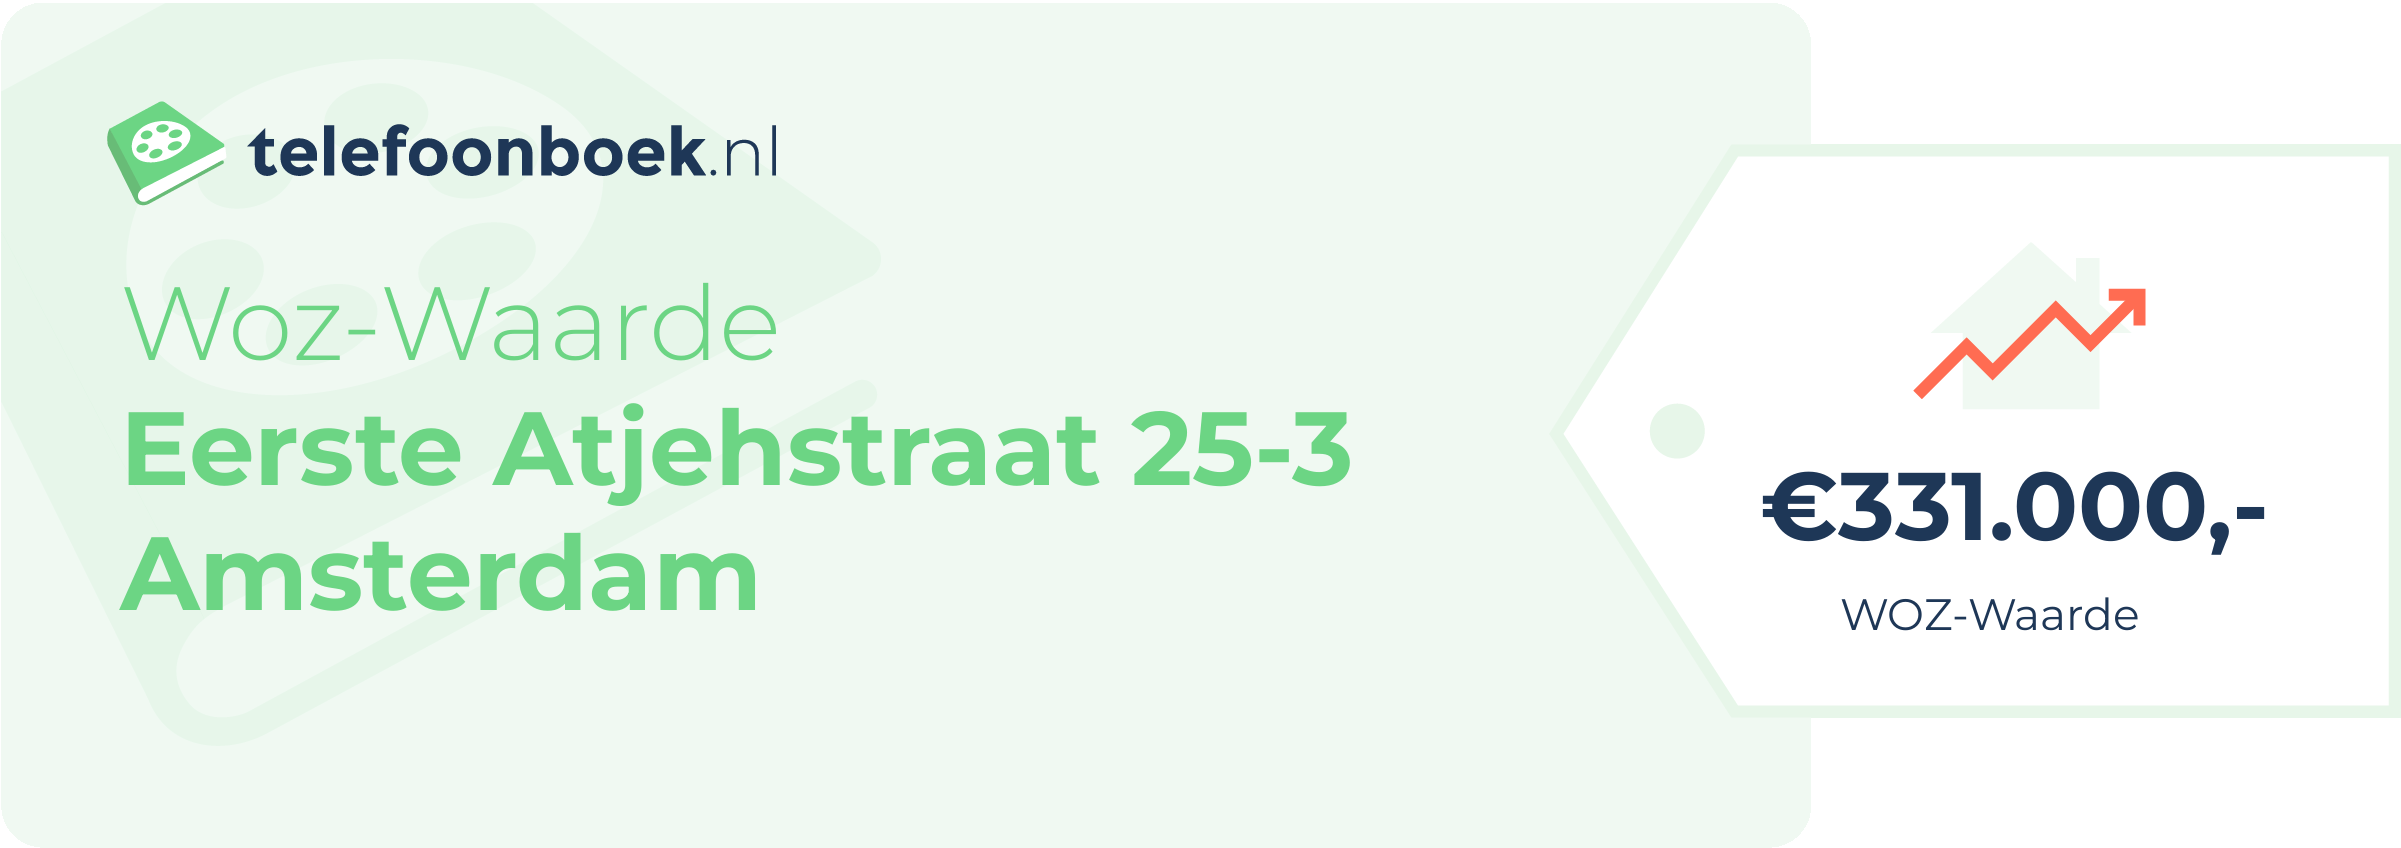 WOZ-waarde Eerste Atjehstraat 25-3 Amsterdam